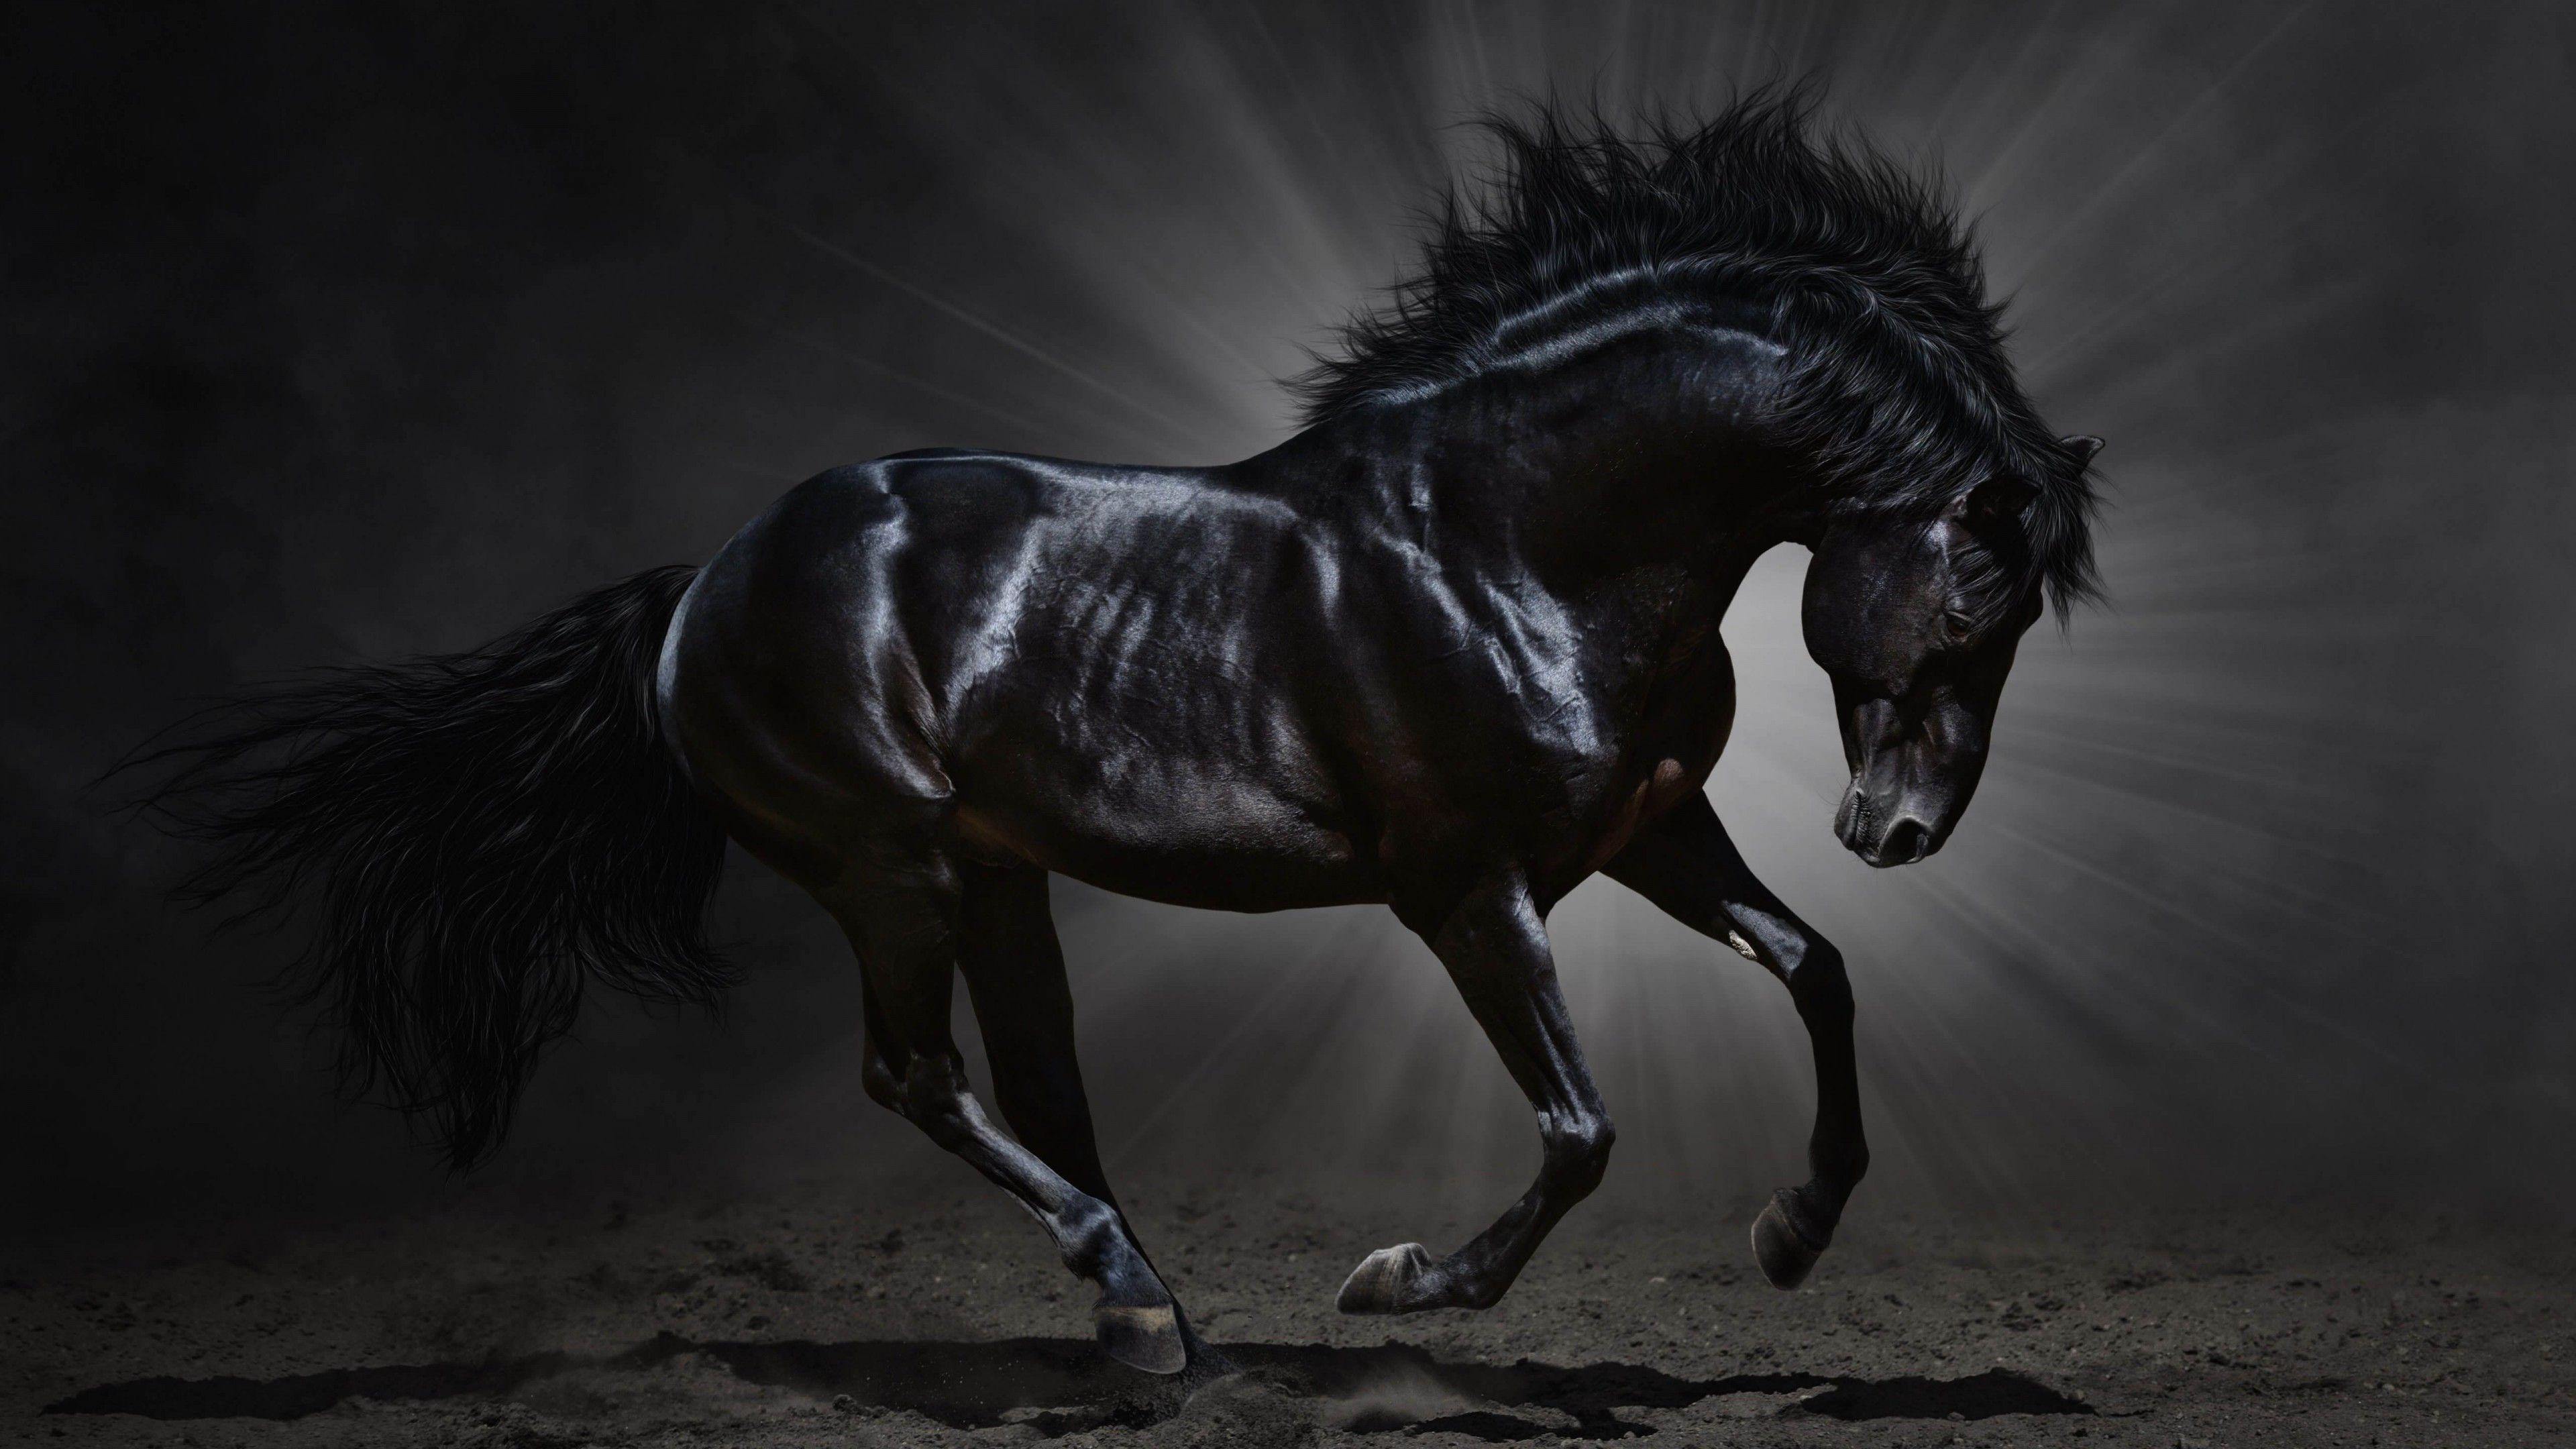 Black Horse Desktop Wallpaper. Download Dark Horse HD wallpaper for 4K 3840 x 2160.net. Horses, Horse wallpaper, Horse picture